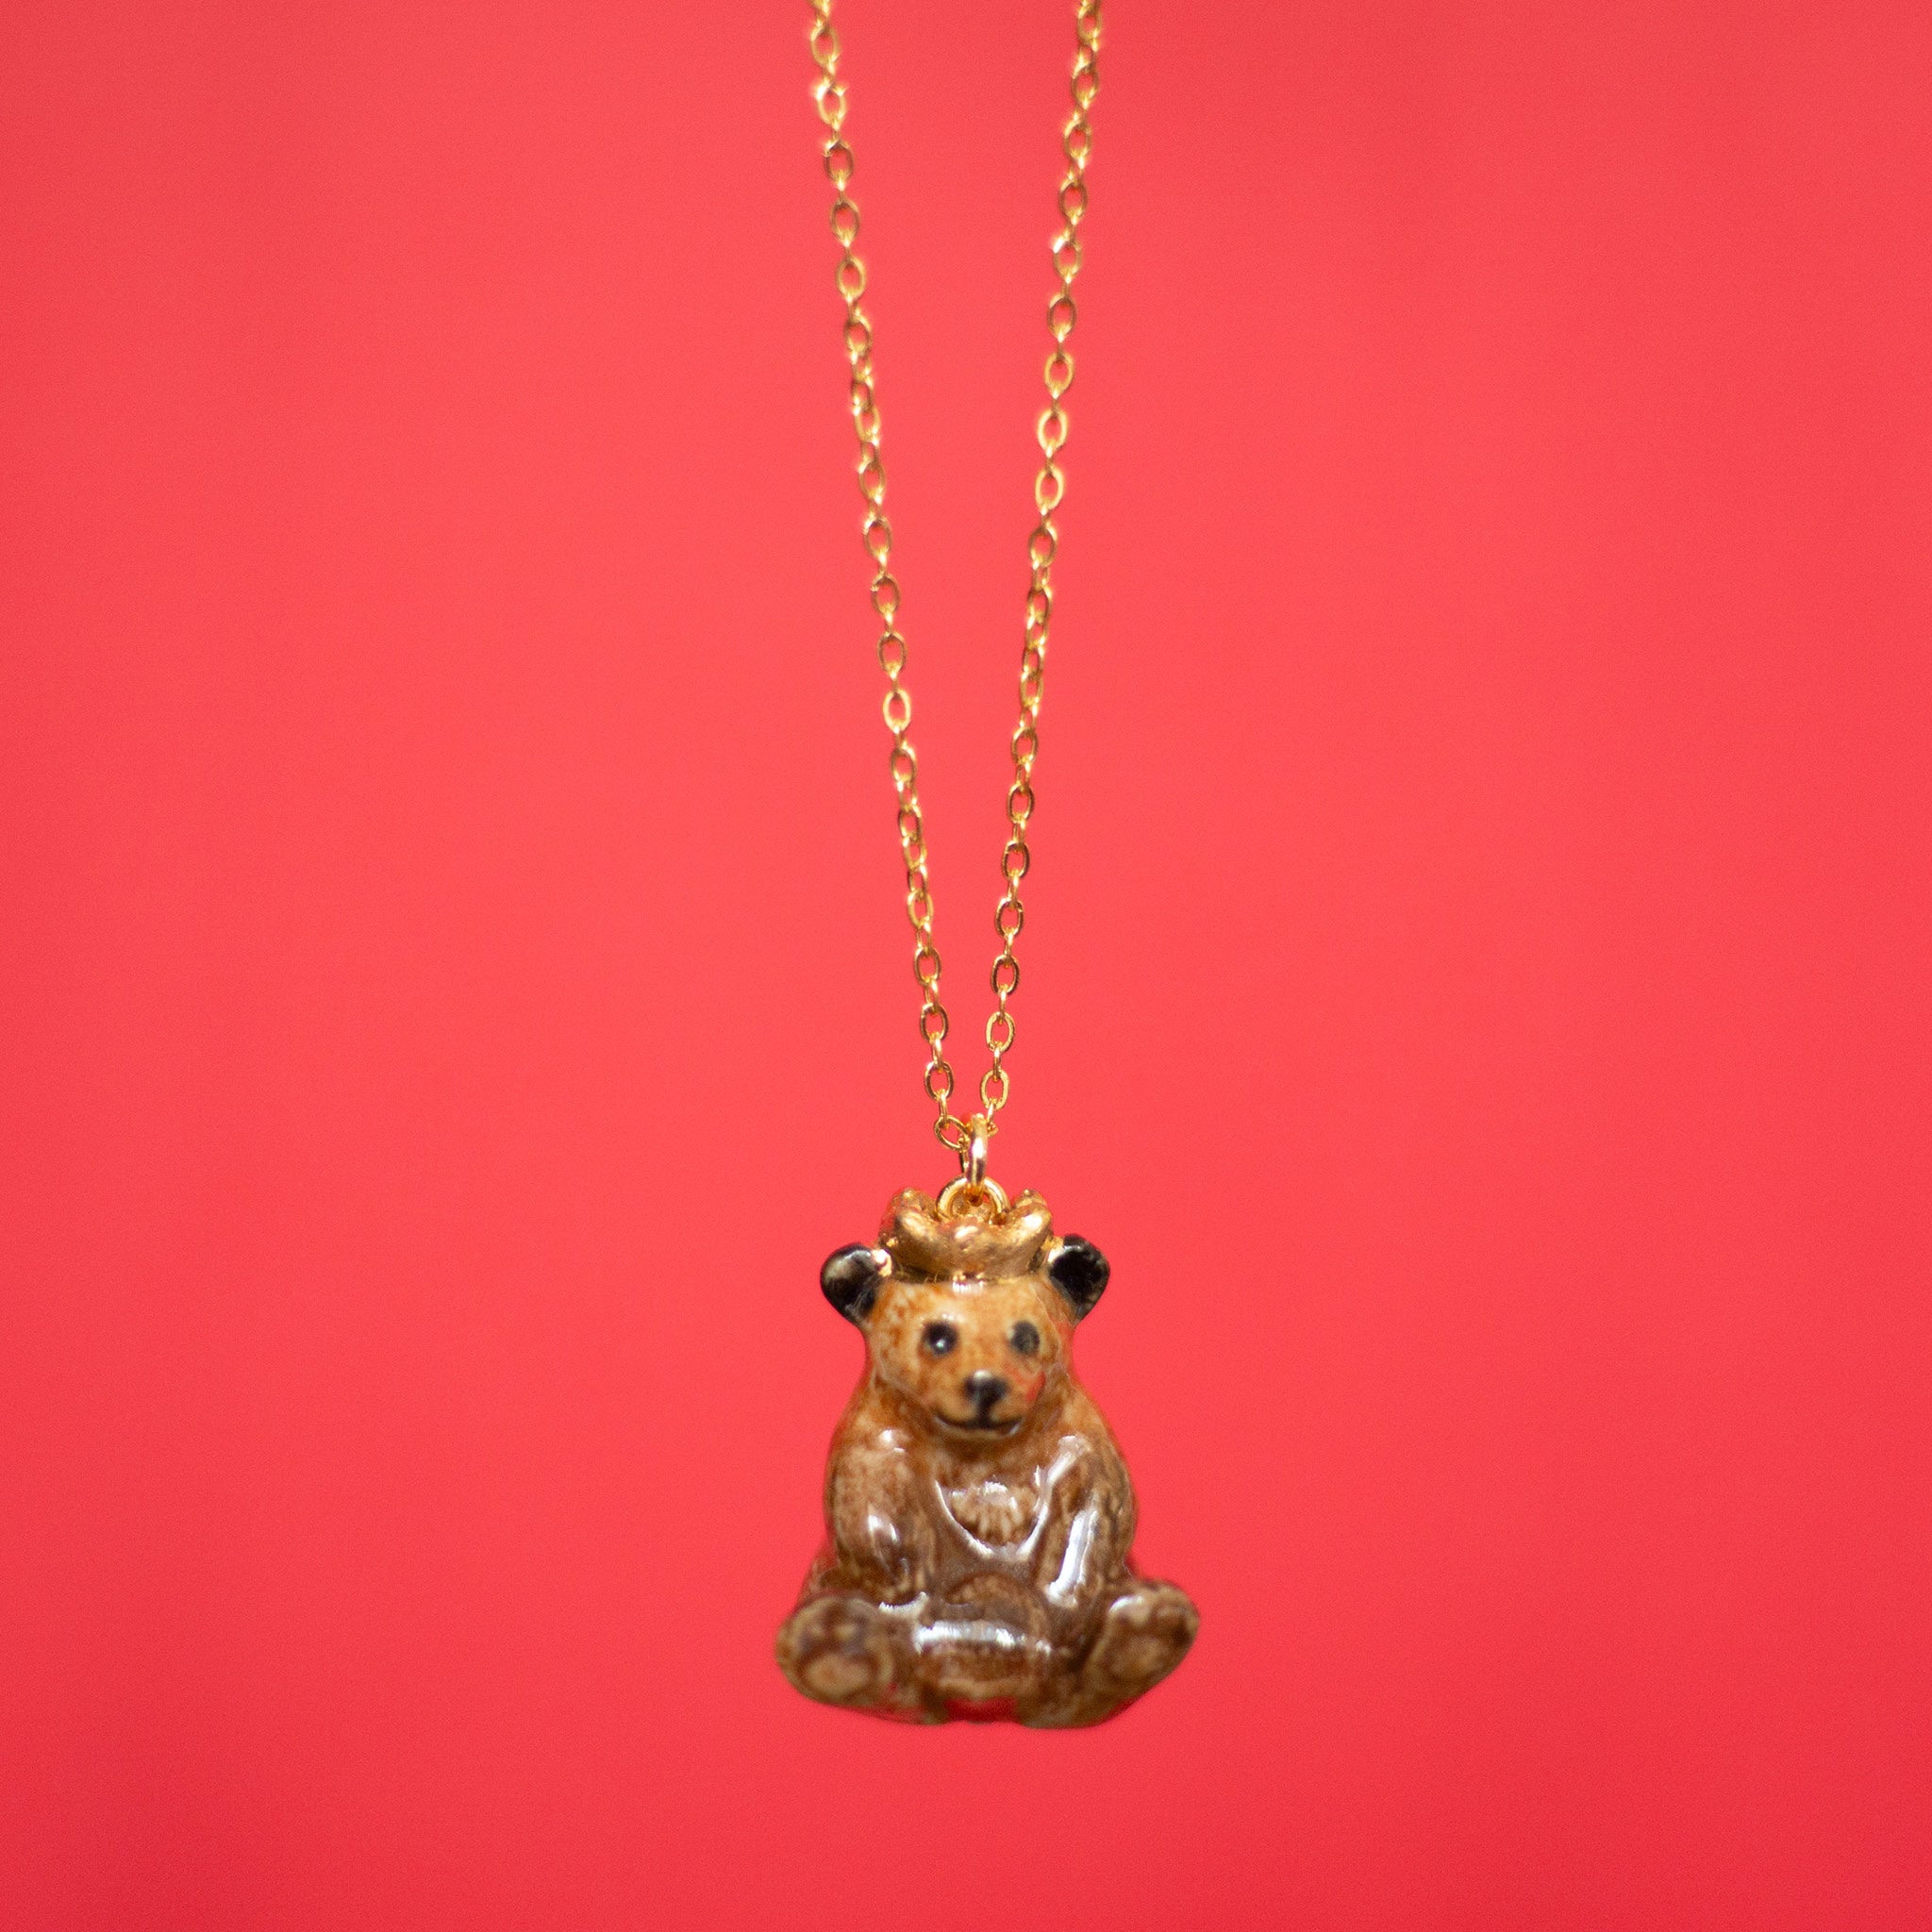 Bear Necklace | Camp Hollow Ceramic Animal Jewelry